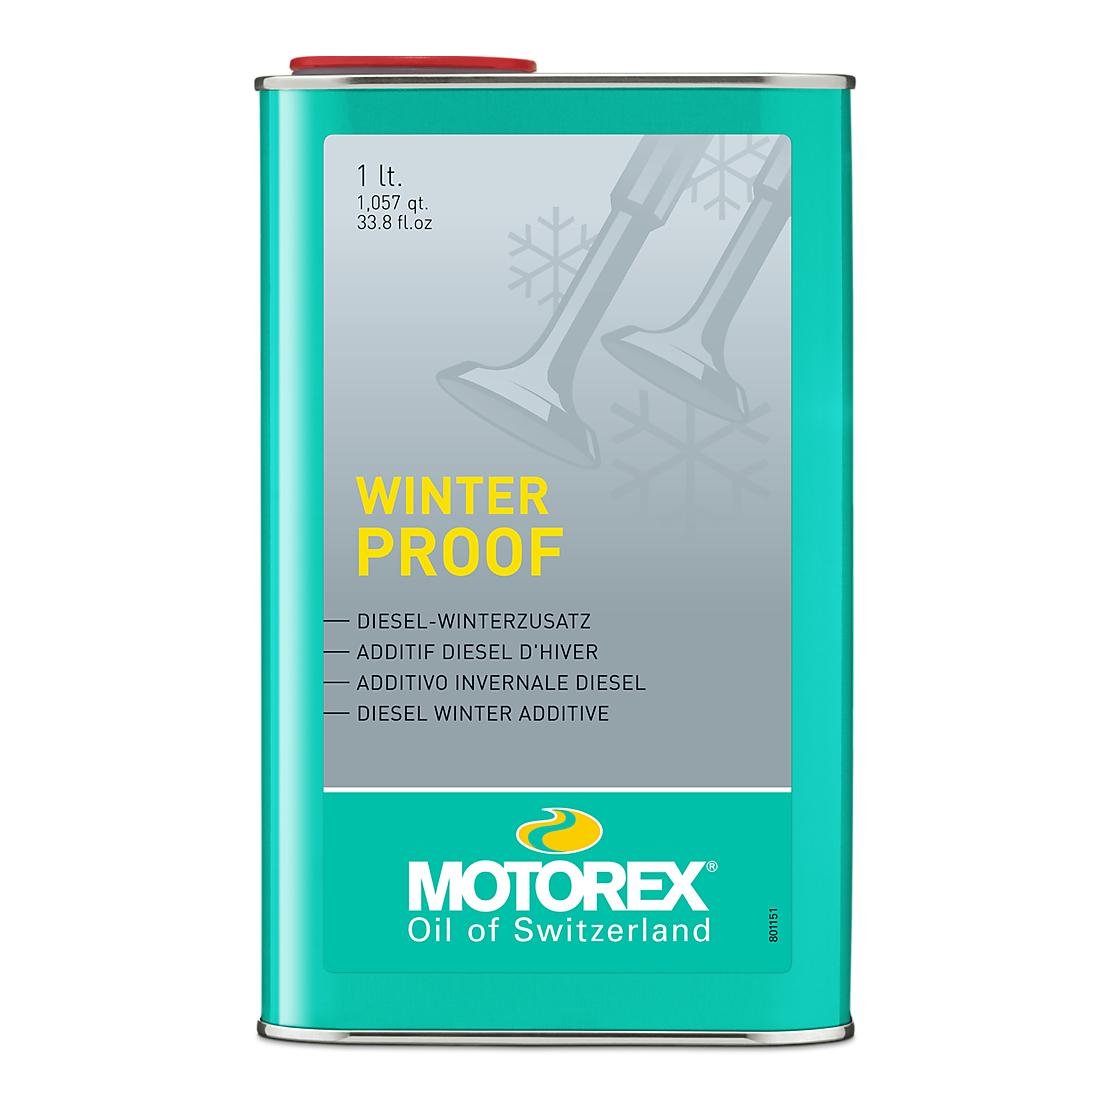 Motorex Winter Proof - Dieseladditiv